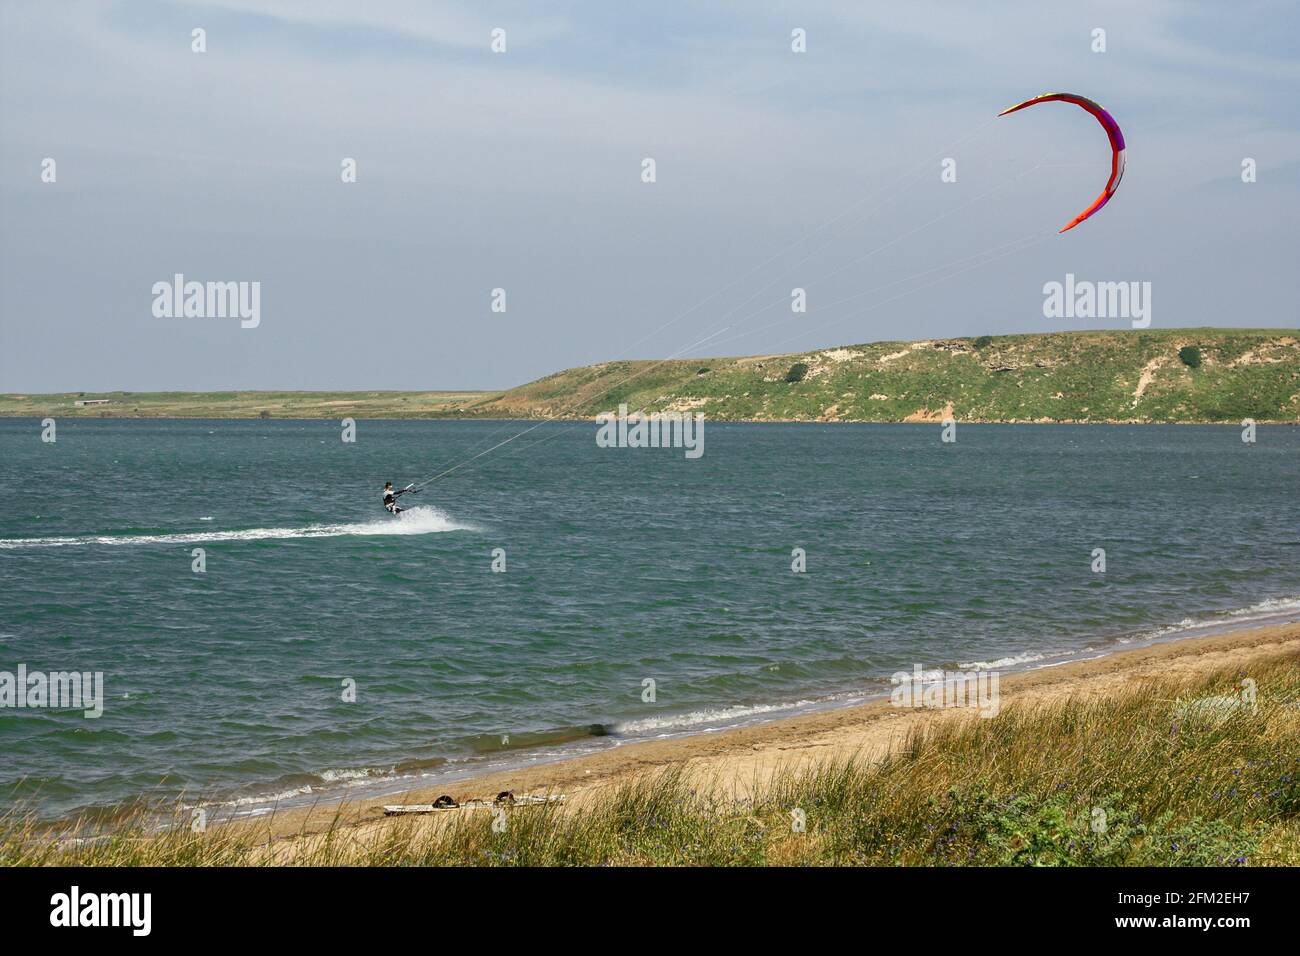 Man kite surf (kite-boarding) nel lago Salt (Tuz golu) vicino alla spiaggia di Kefalos nell'isola di Gokceada (Imbros), Canakkale, Turchia Foto Stock